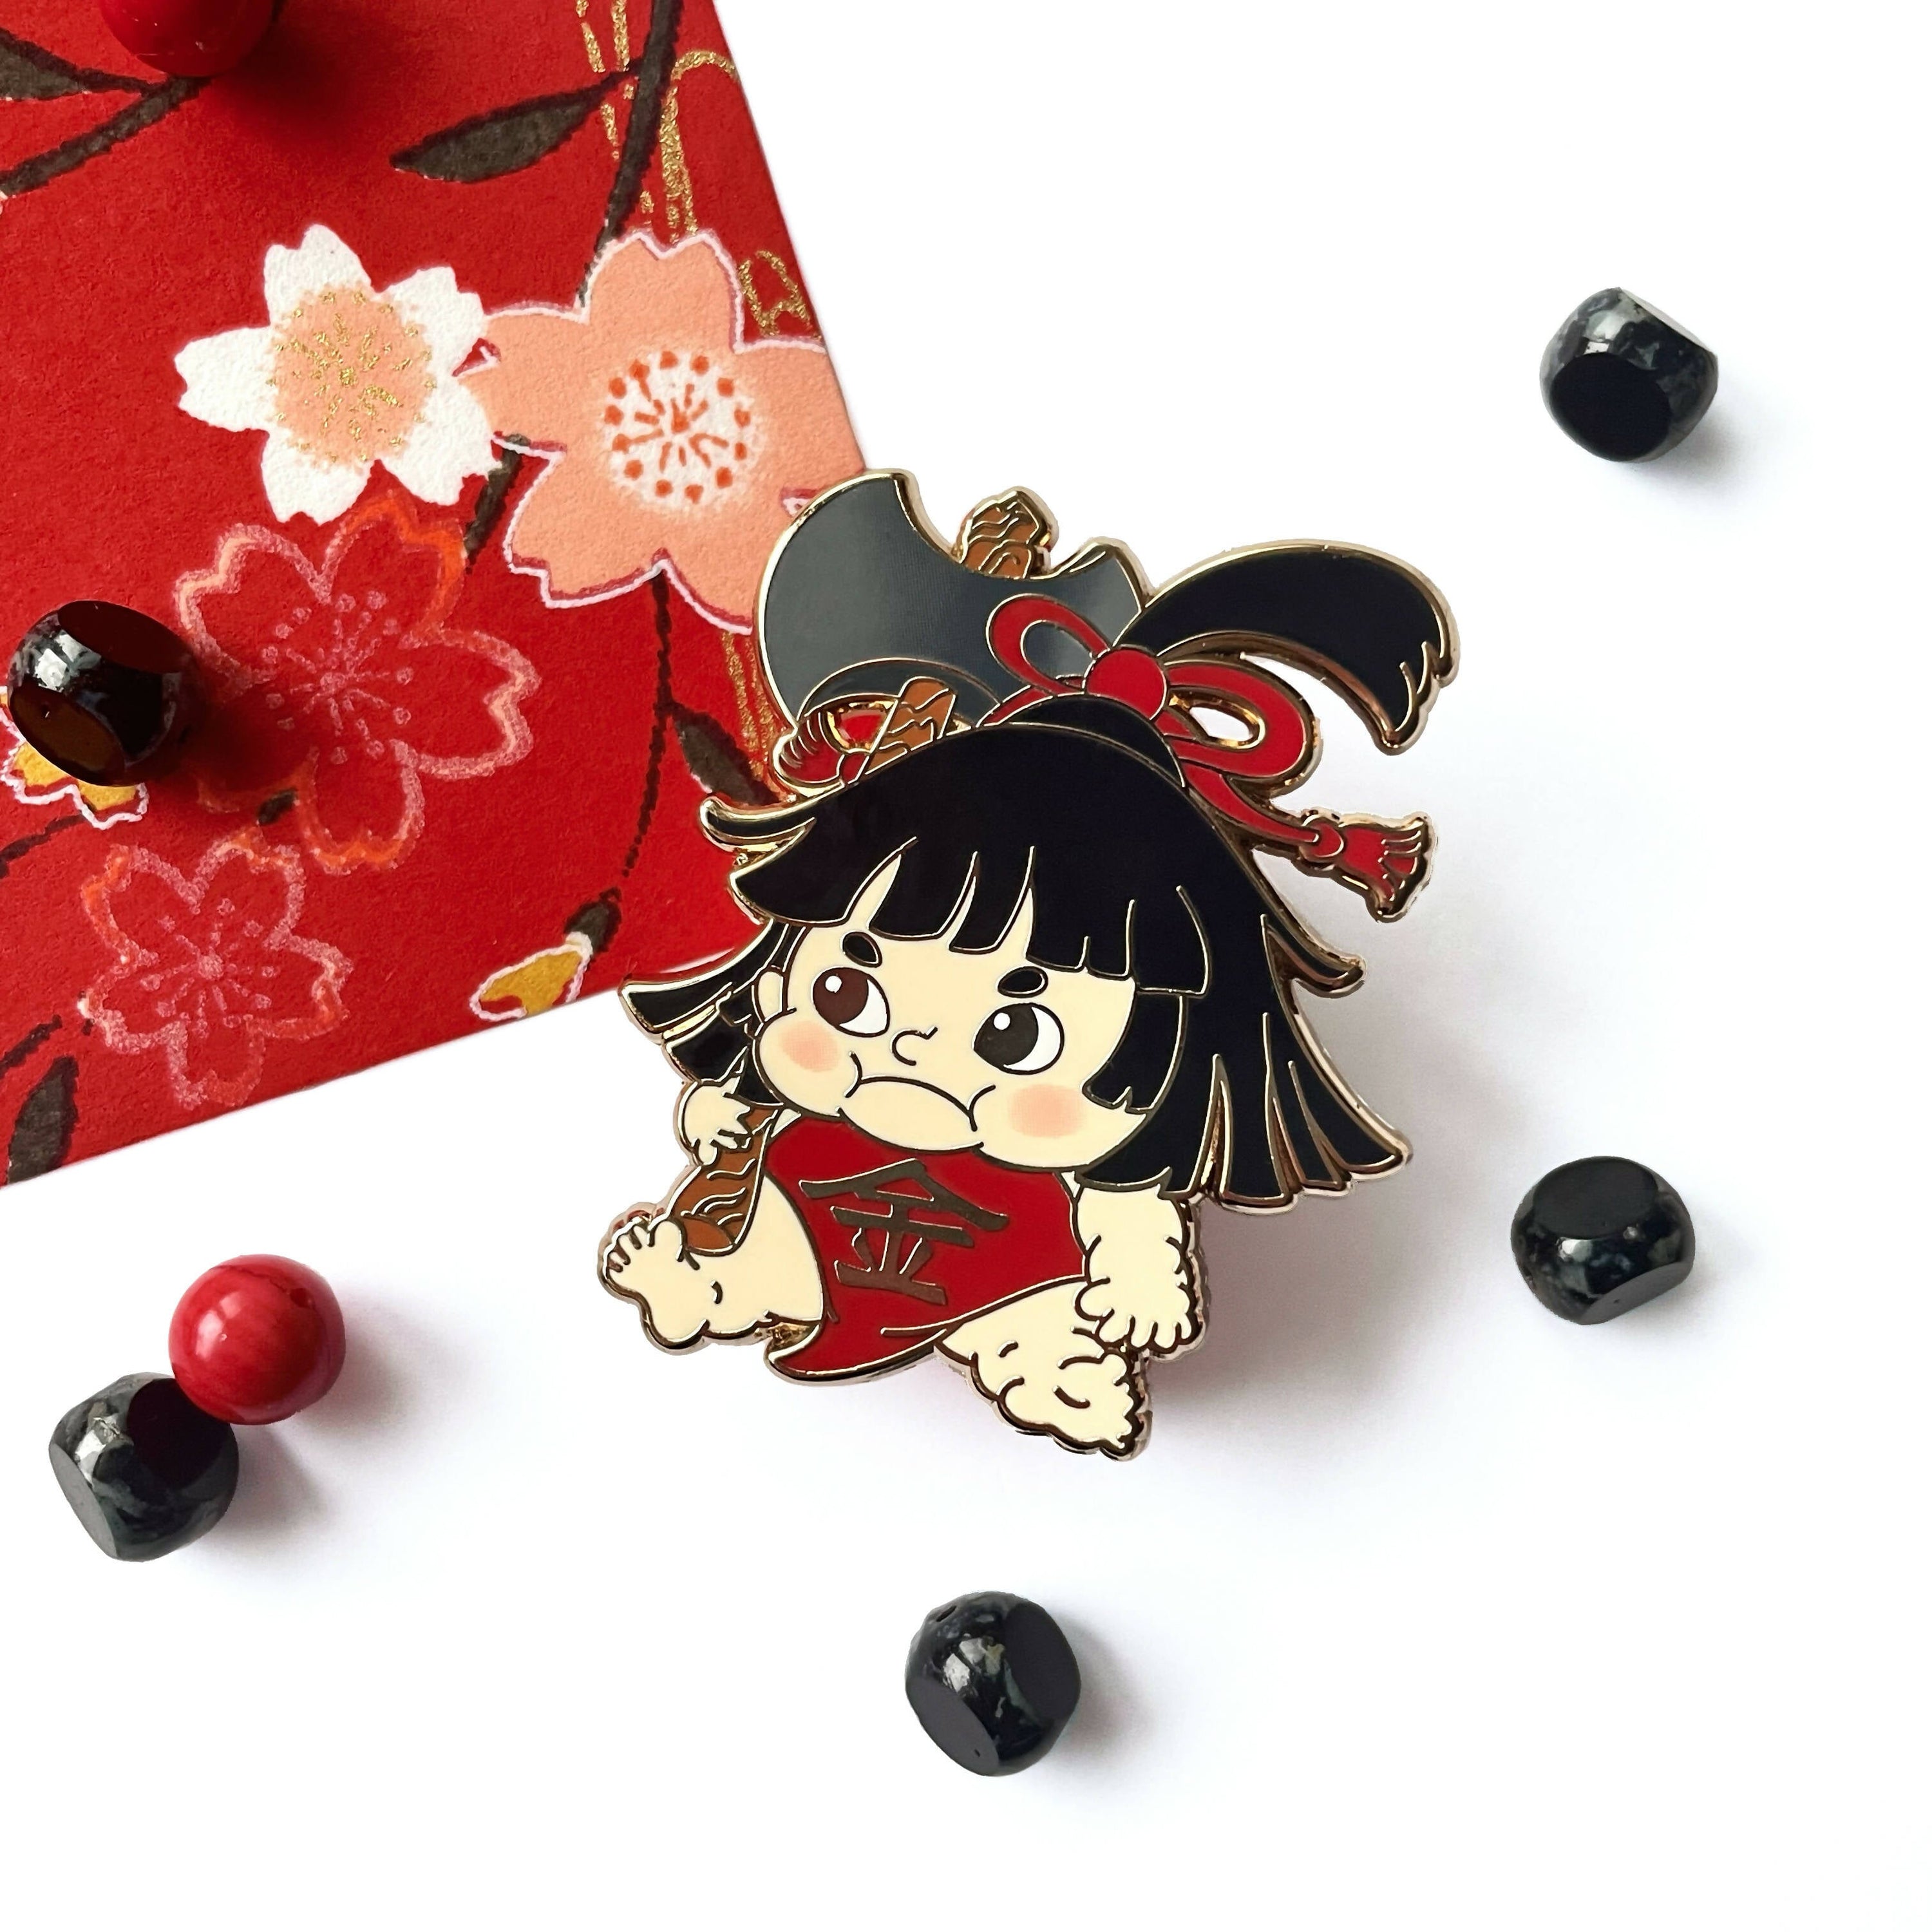 Pin Kintaro Japanese Folklore Hero Kawaii Character • Enamel Pin